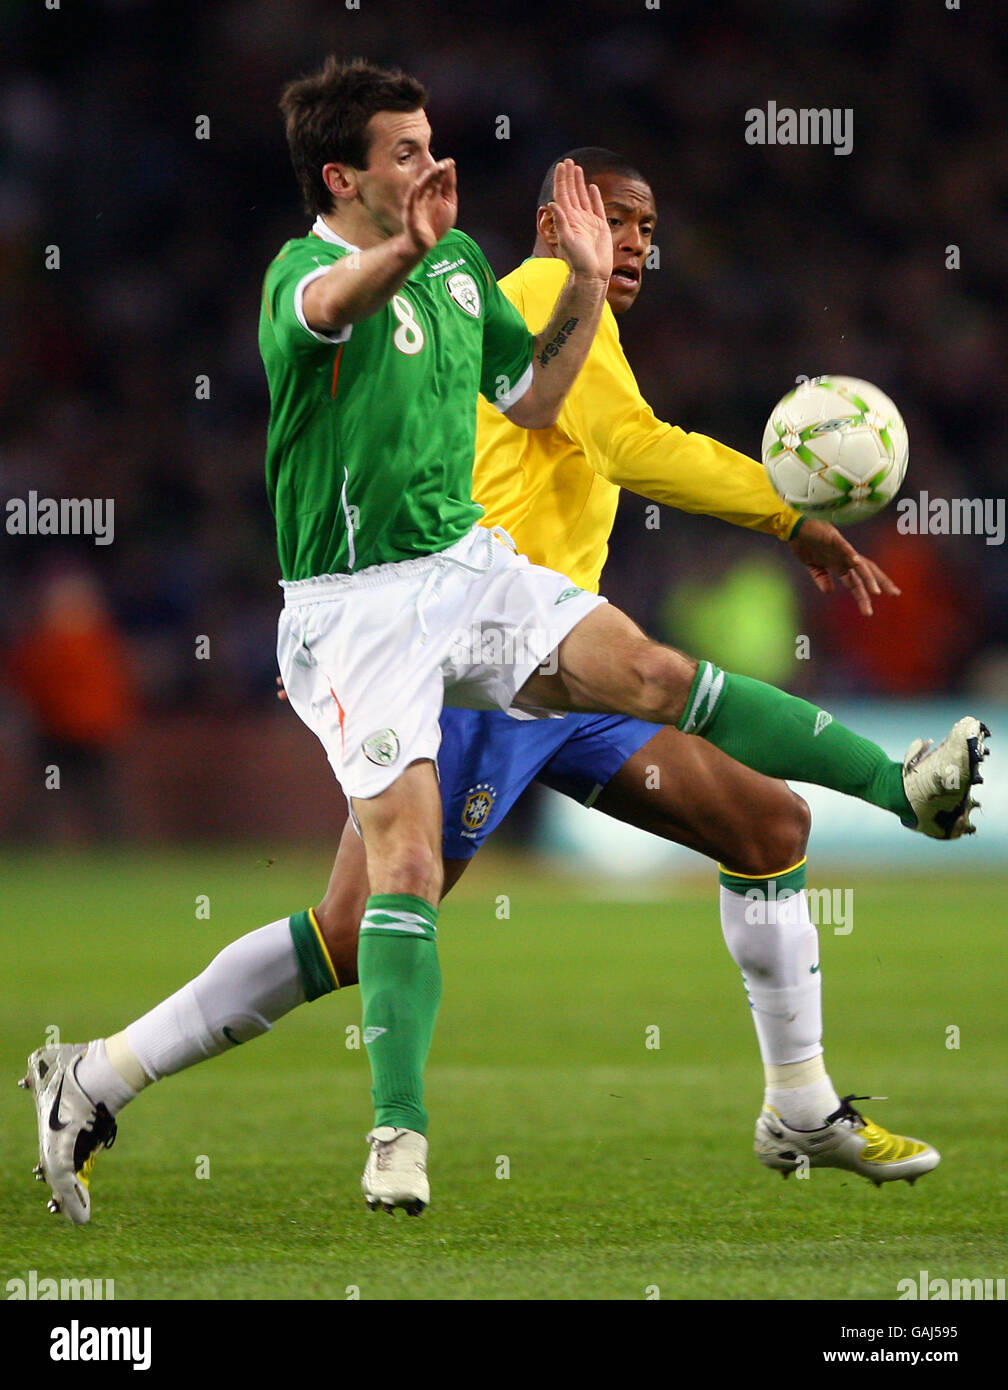 Soccer - International Friendly - Republic of Ireland v Brazil - Croke Park. Republic of Ireland's Liam Miller and Brazil's Julio Baptista Stock Photo